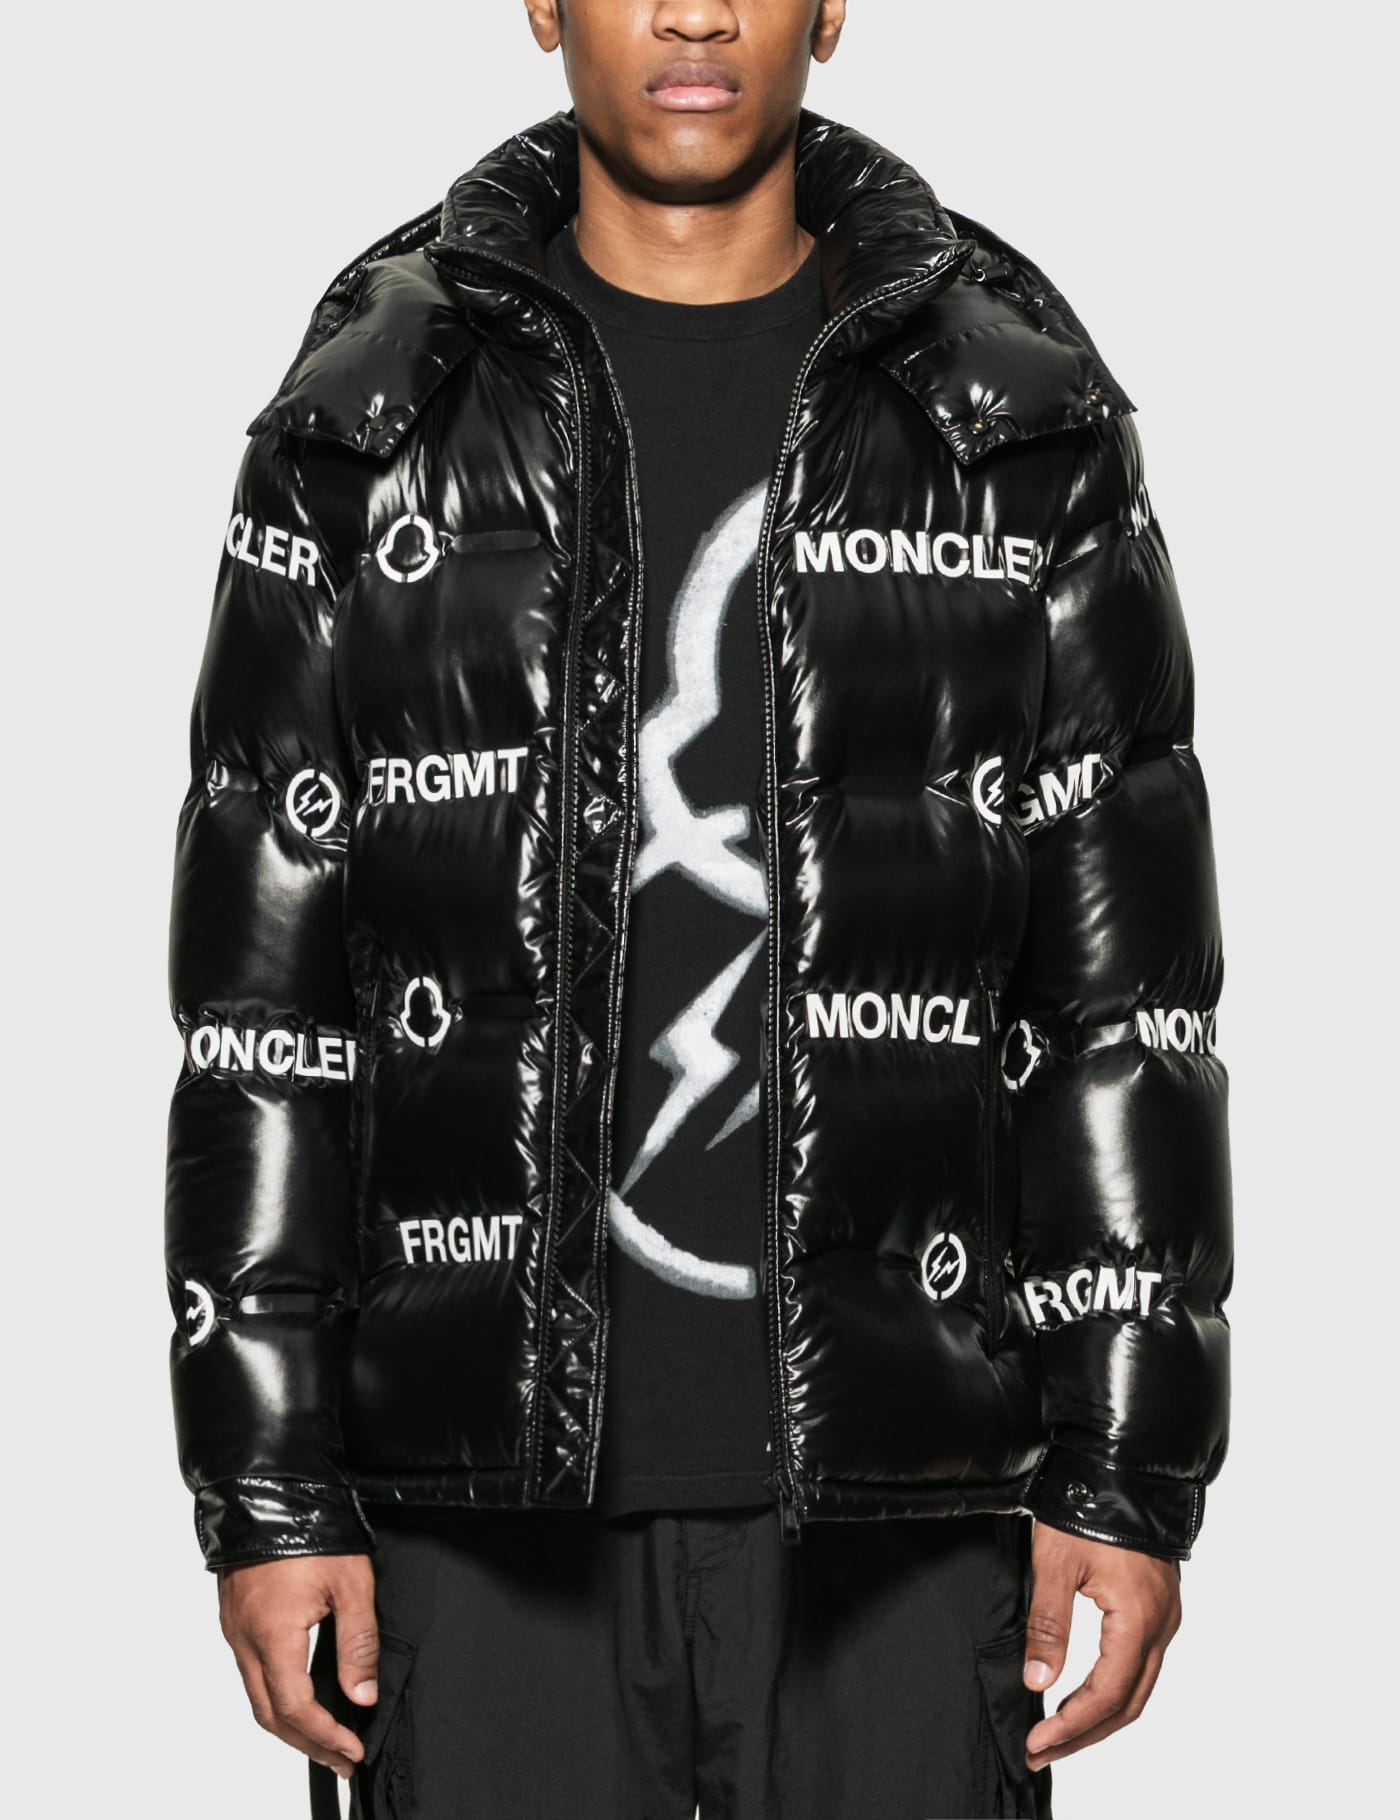 Moncler Genius - Moncler Genius x Fragment Design Mayconne Jacket 